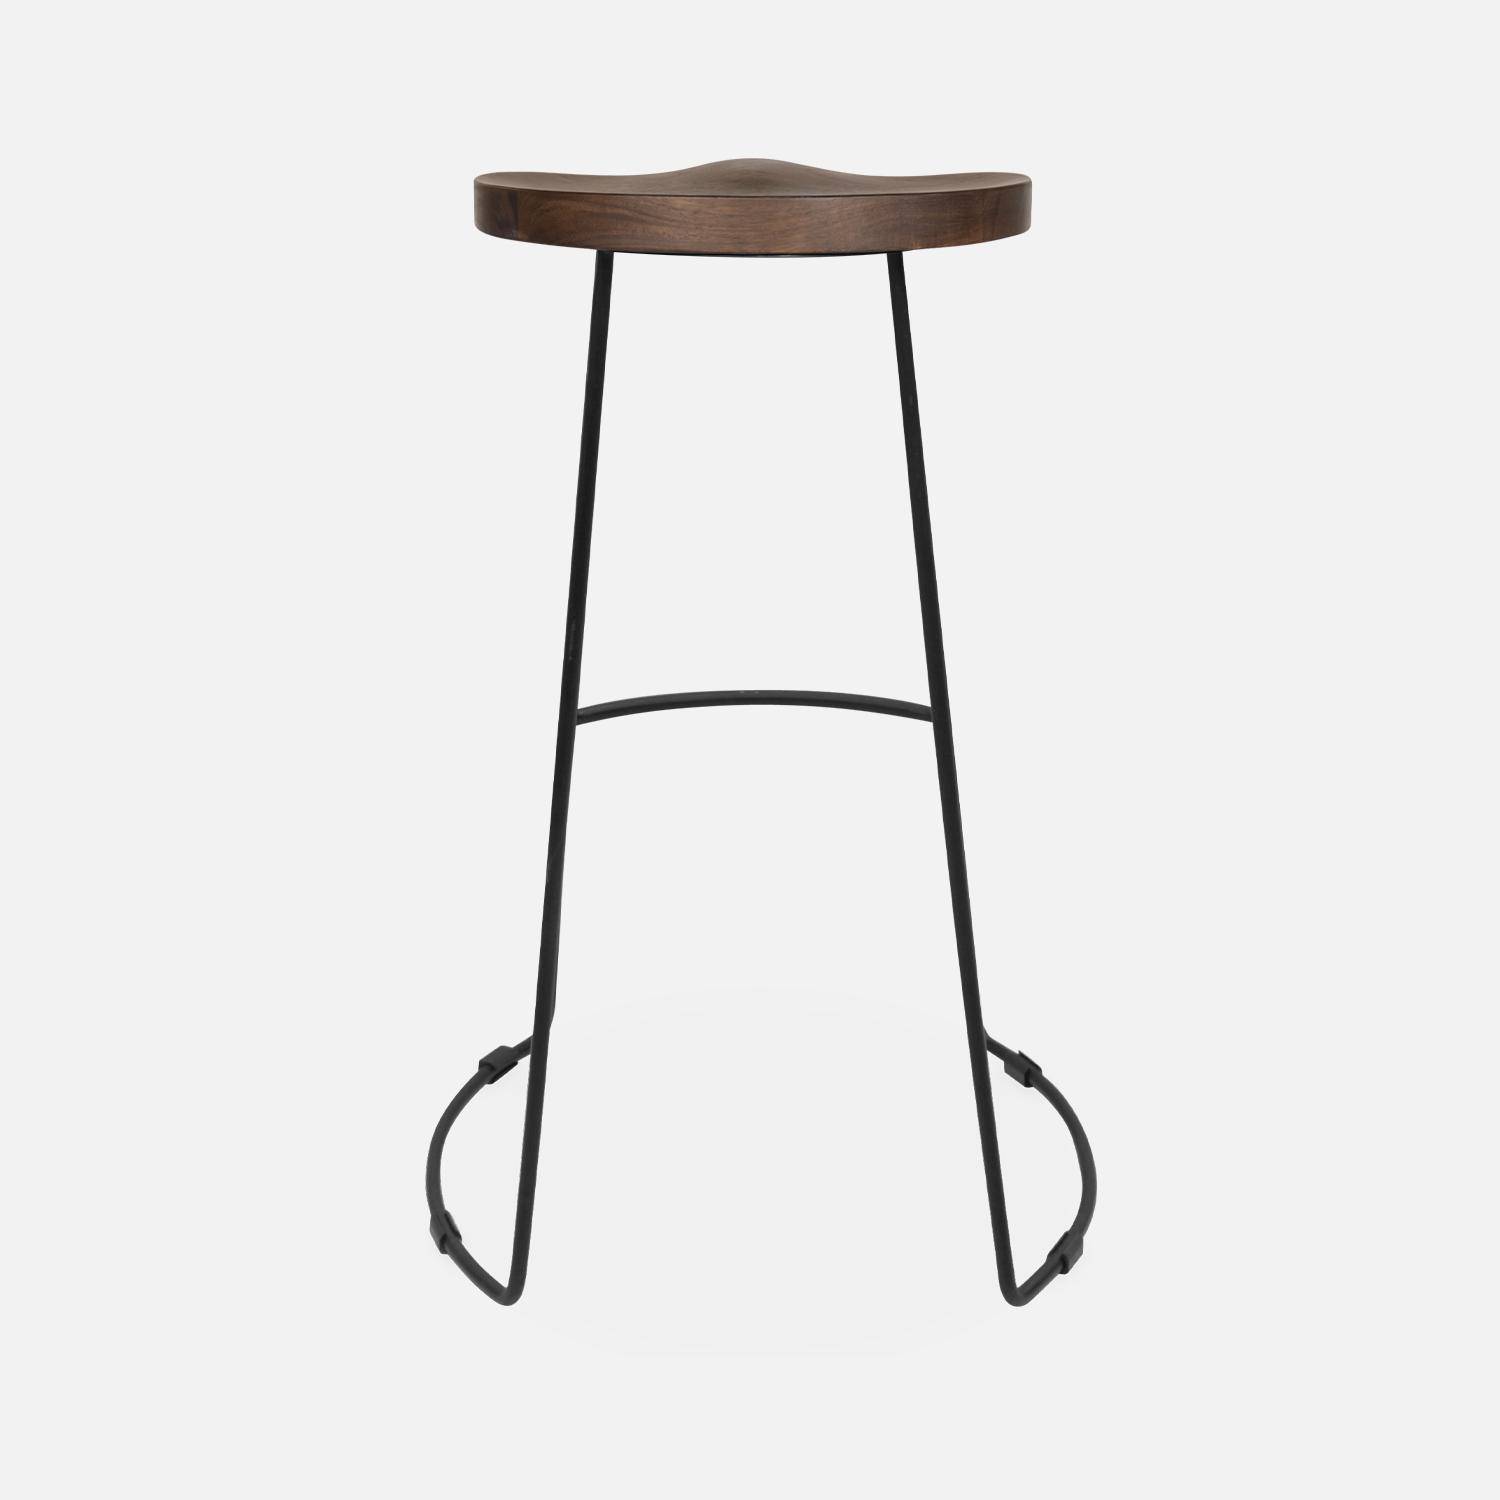 Pair of industrial metal and wooden bar stools, 47x40x75cm, Jaya, Light Walnut, Mango wood seat, black metal legs,sweeek,Photo6